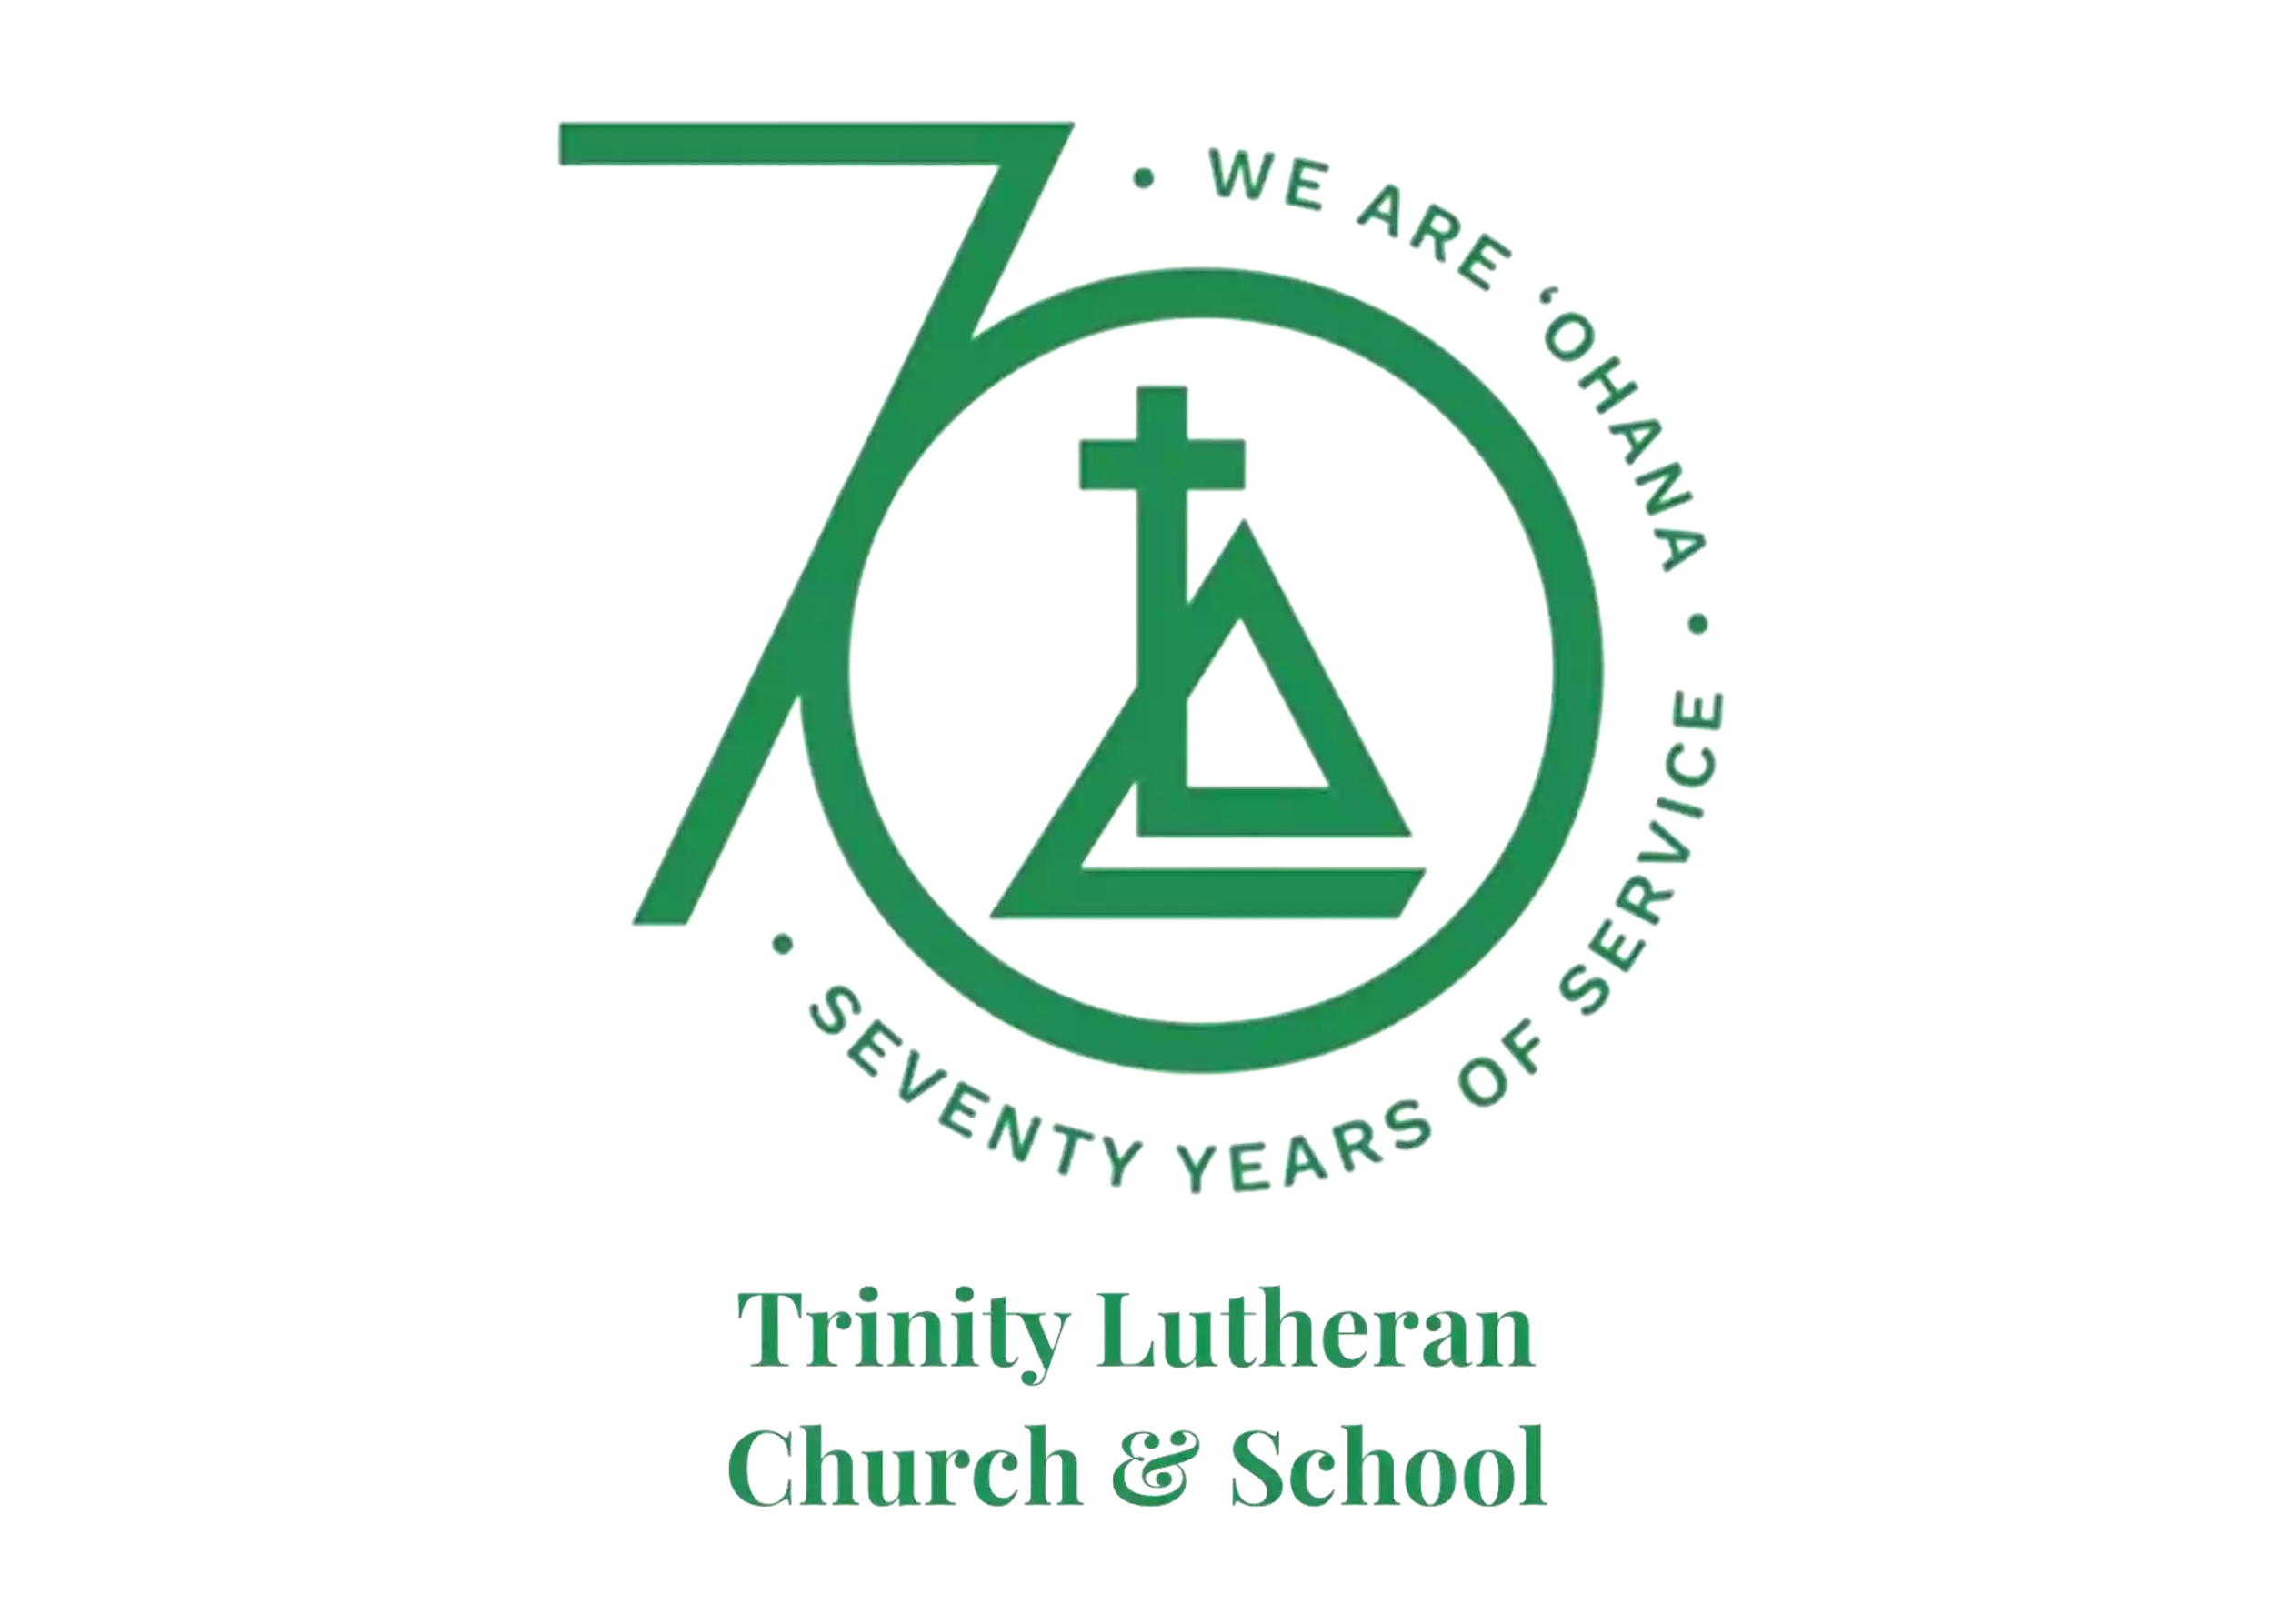 Trinity Lutheran Church & School